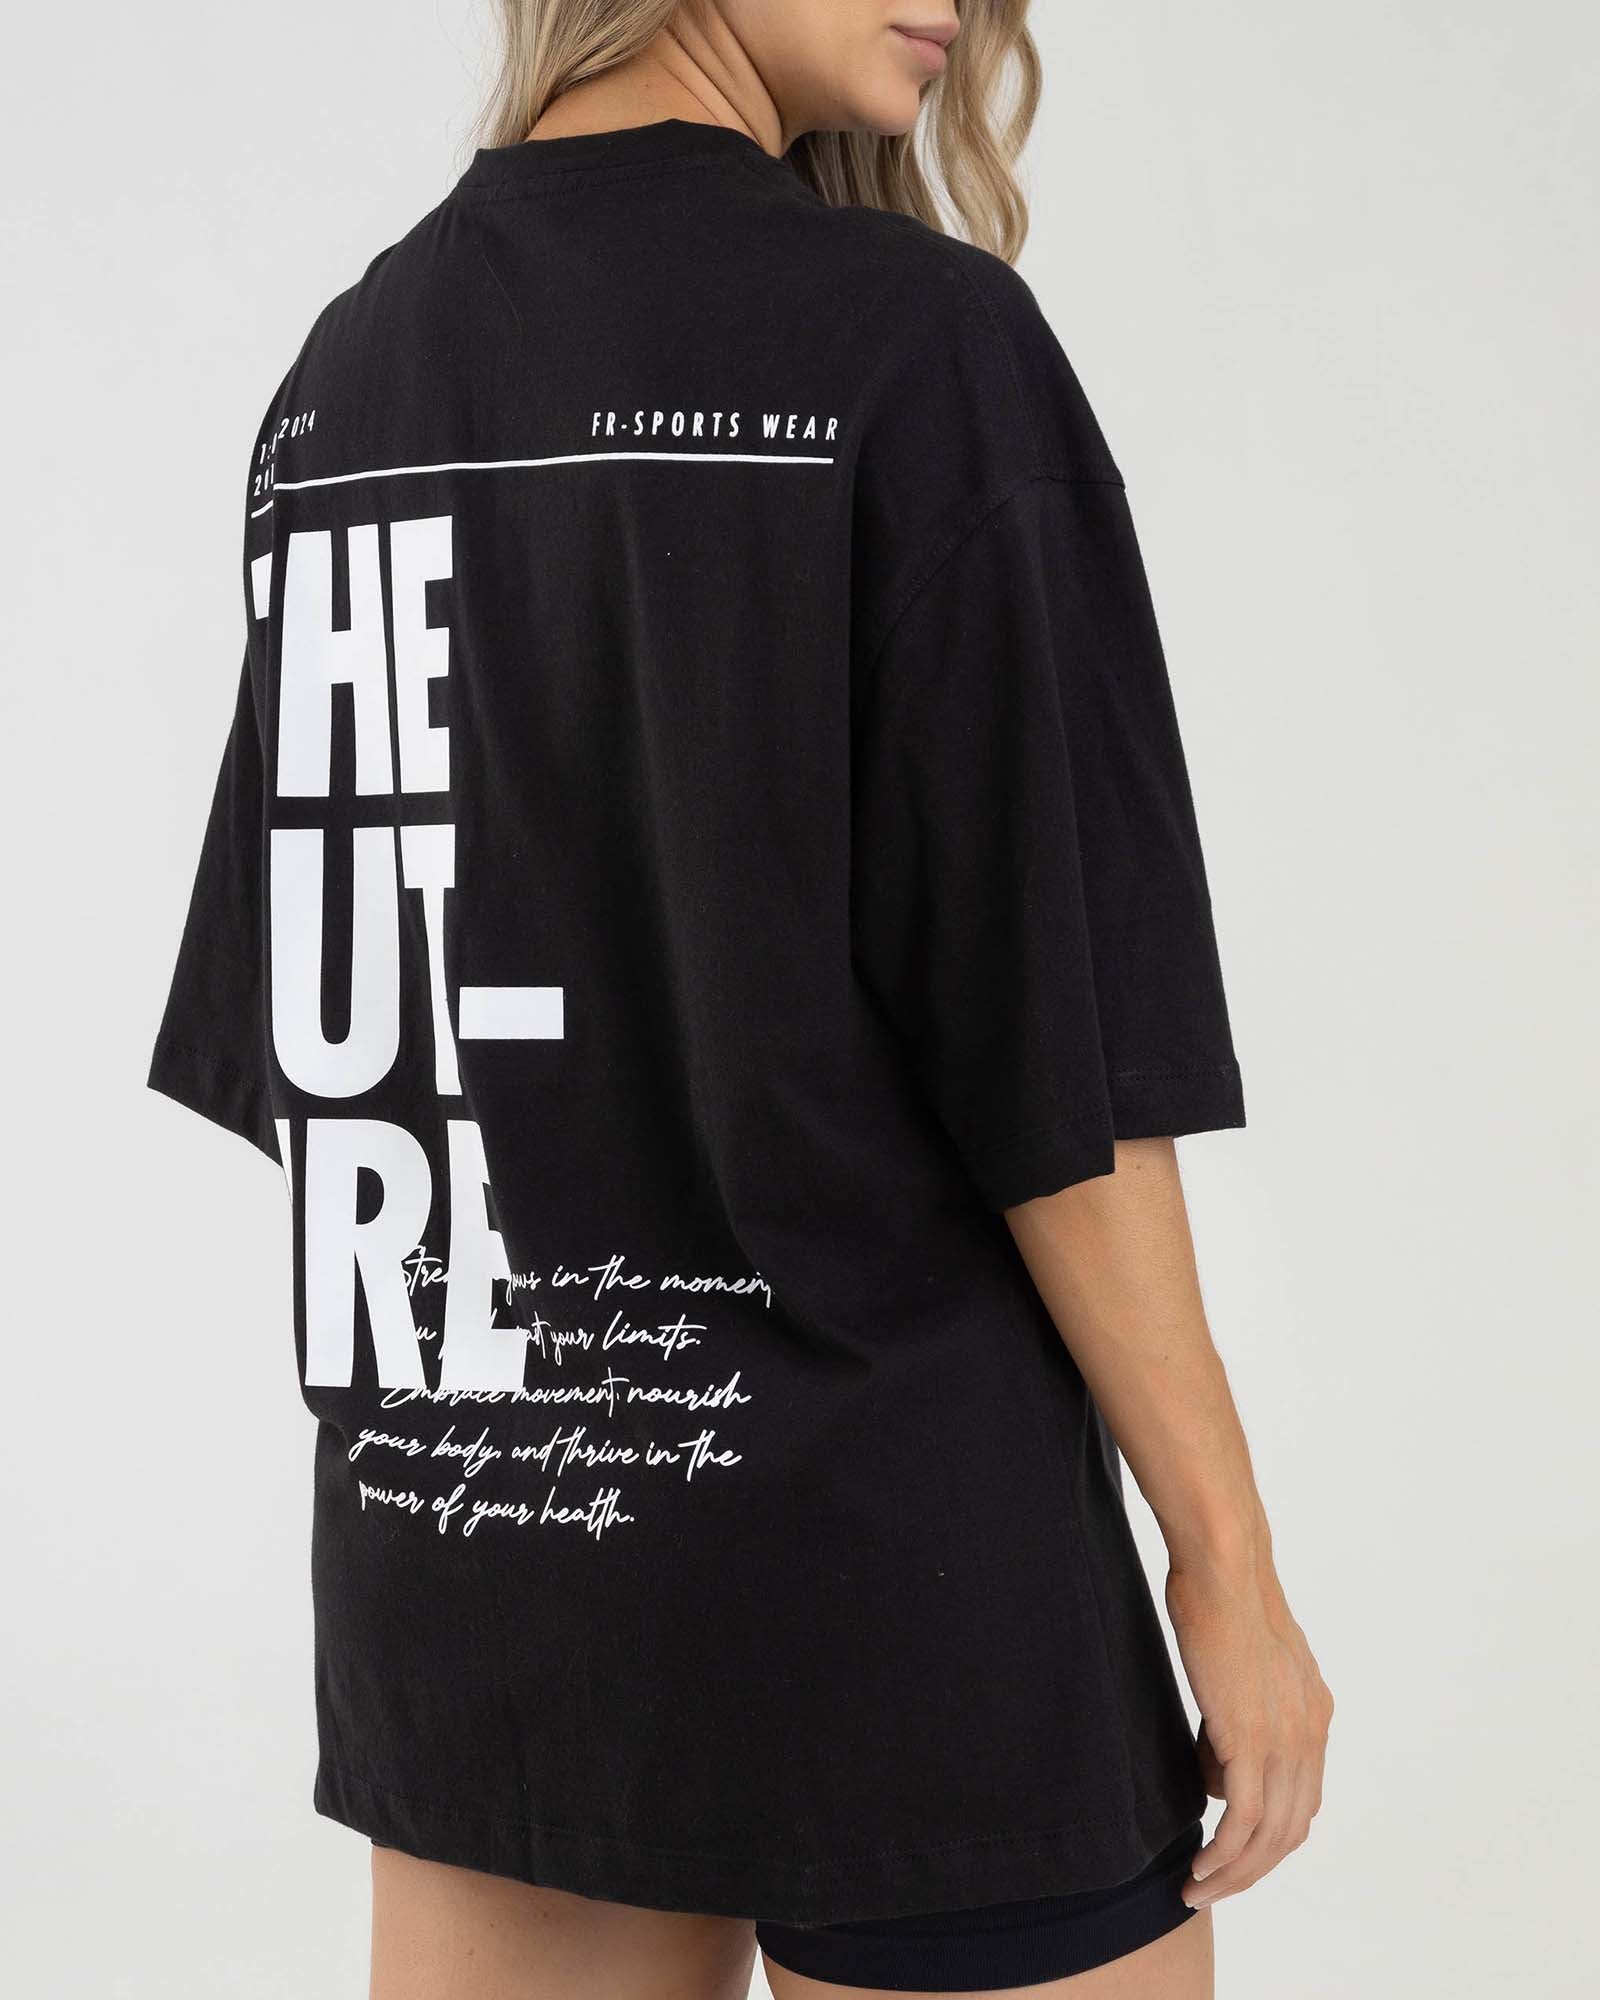 Camiseta oversize heavy negra femme FIBER